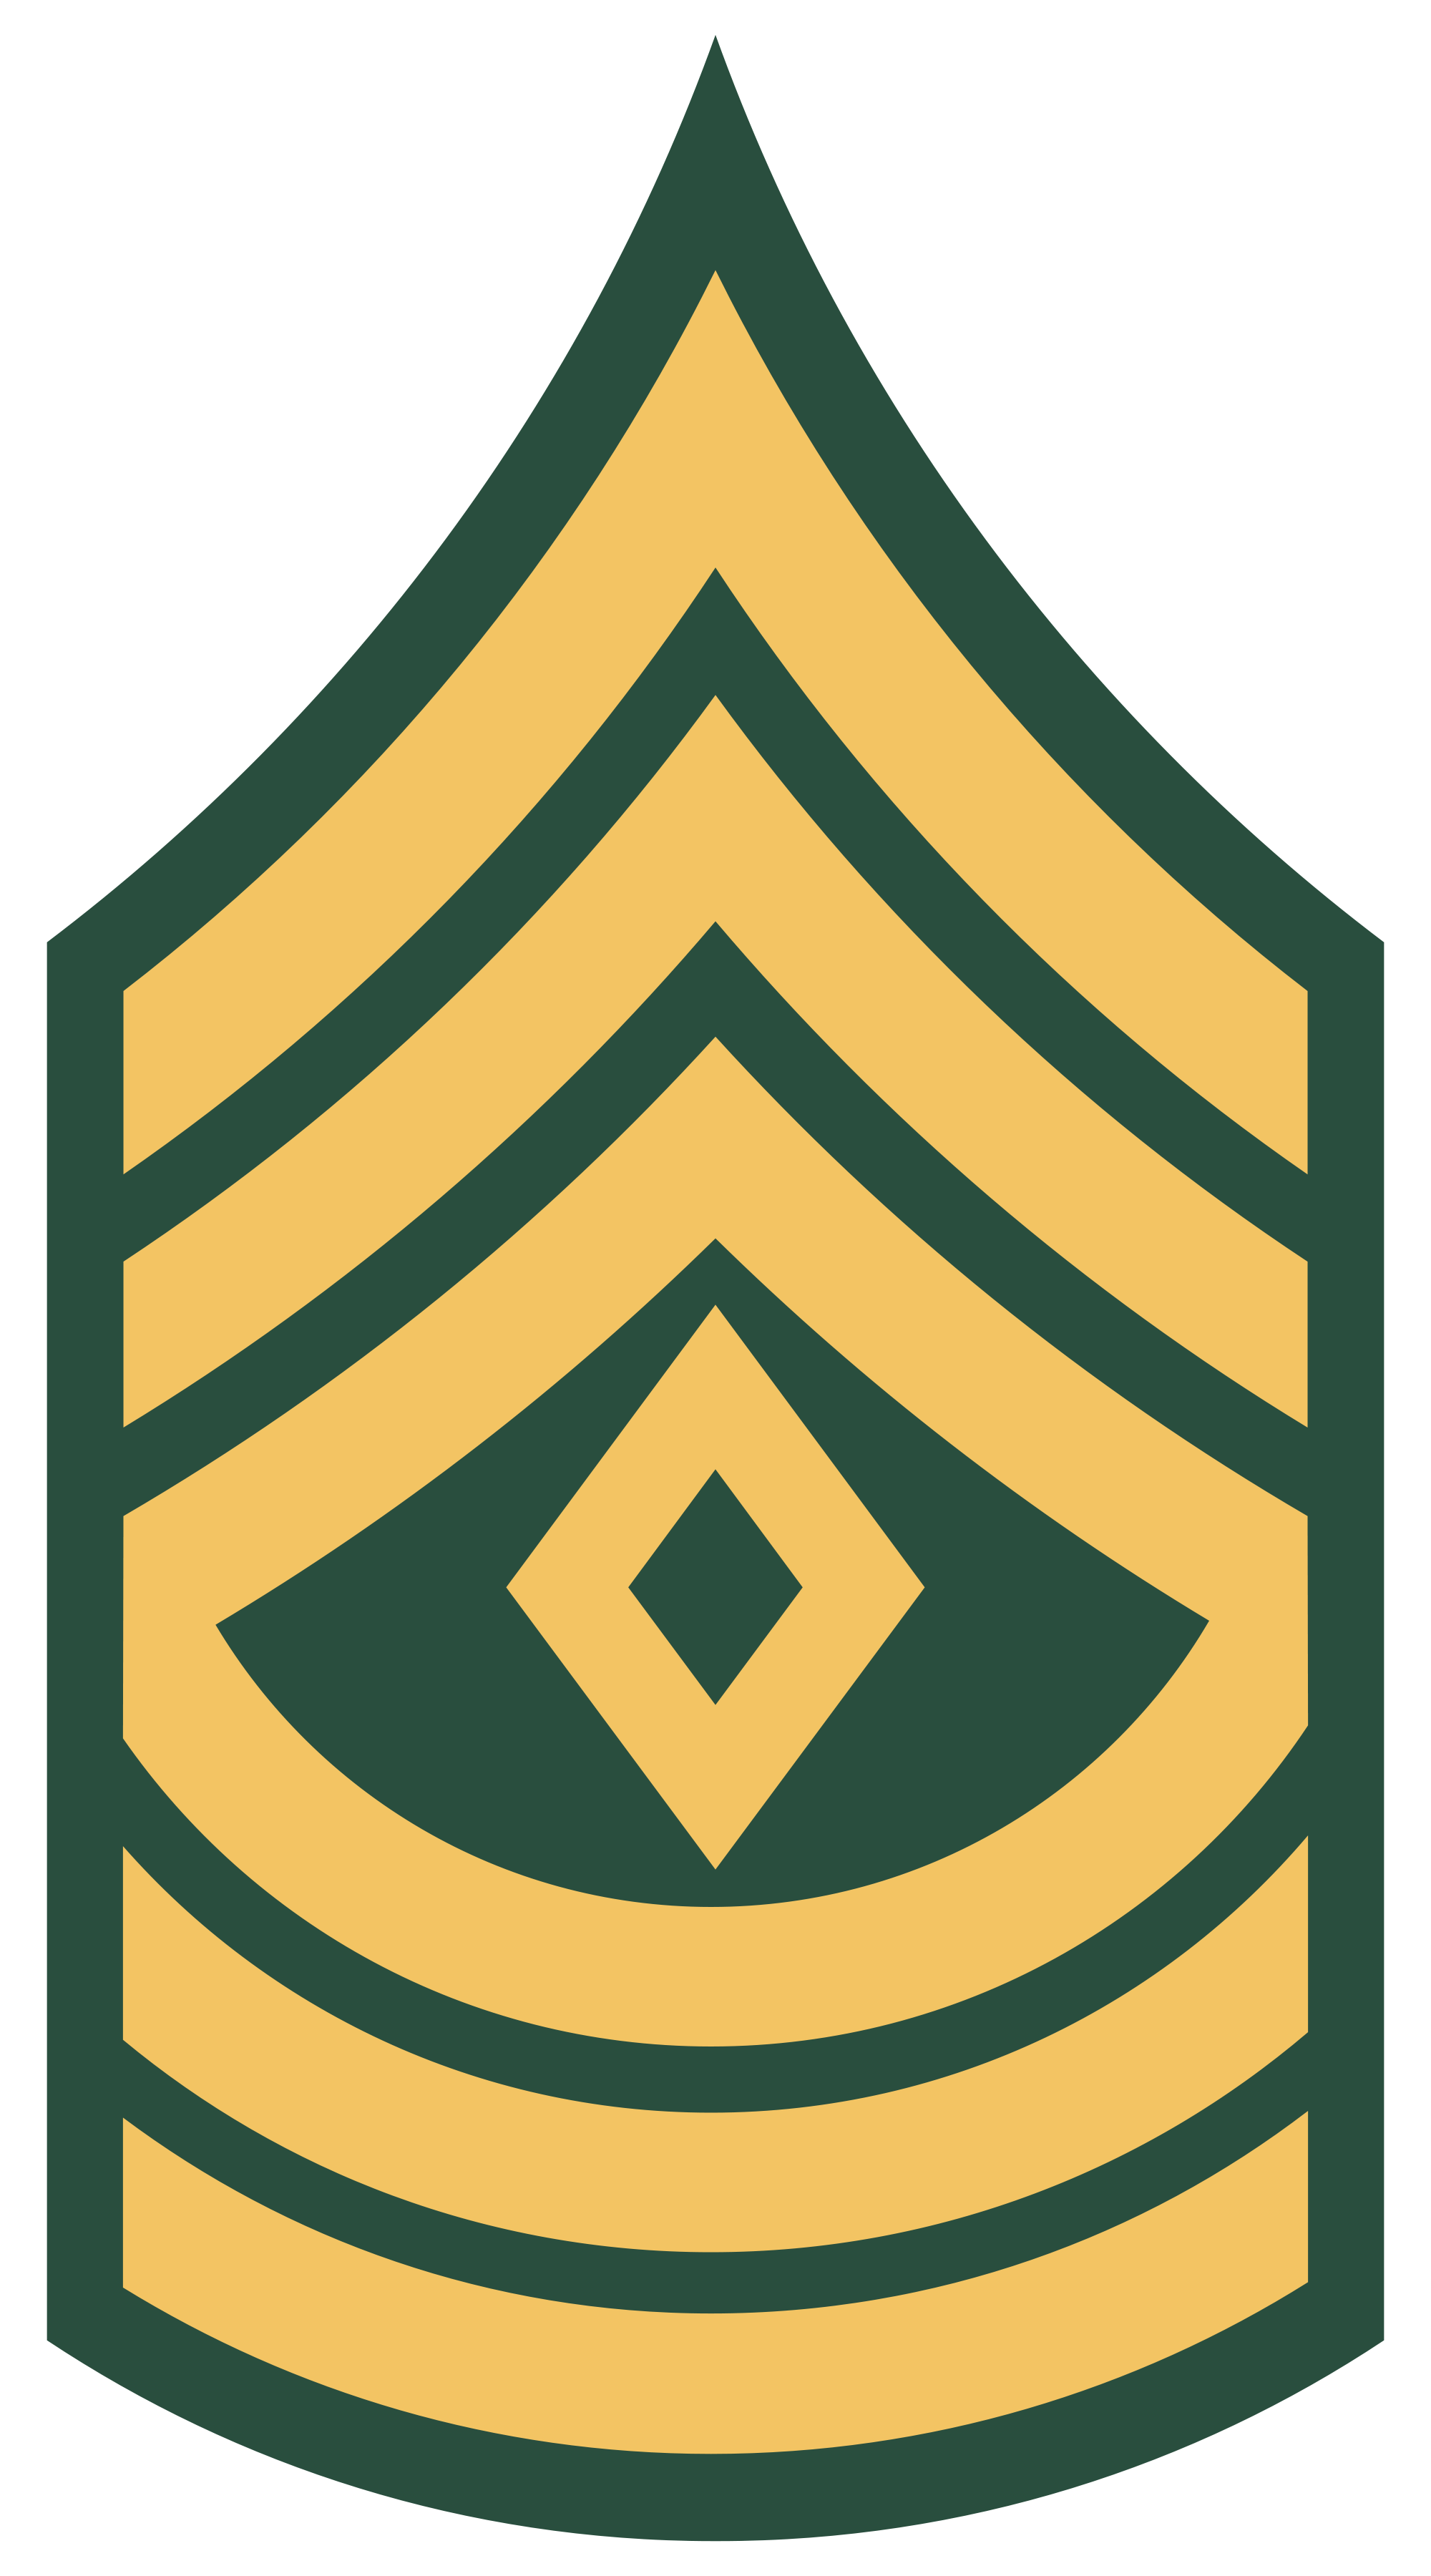 Army logo clipart kid